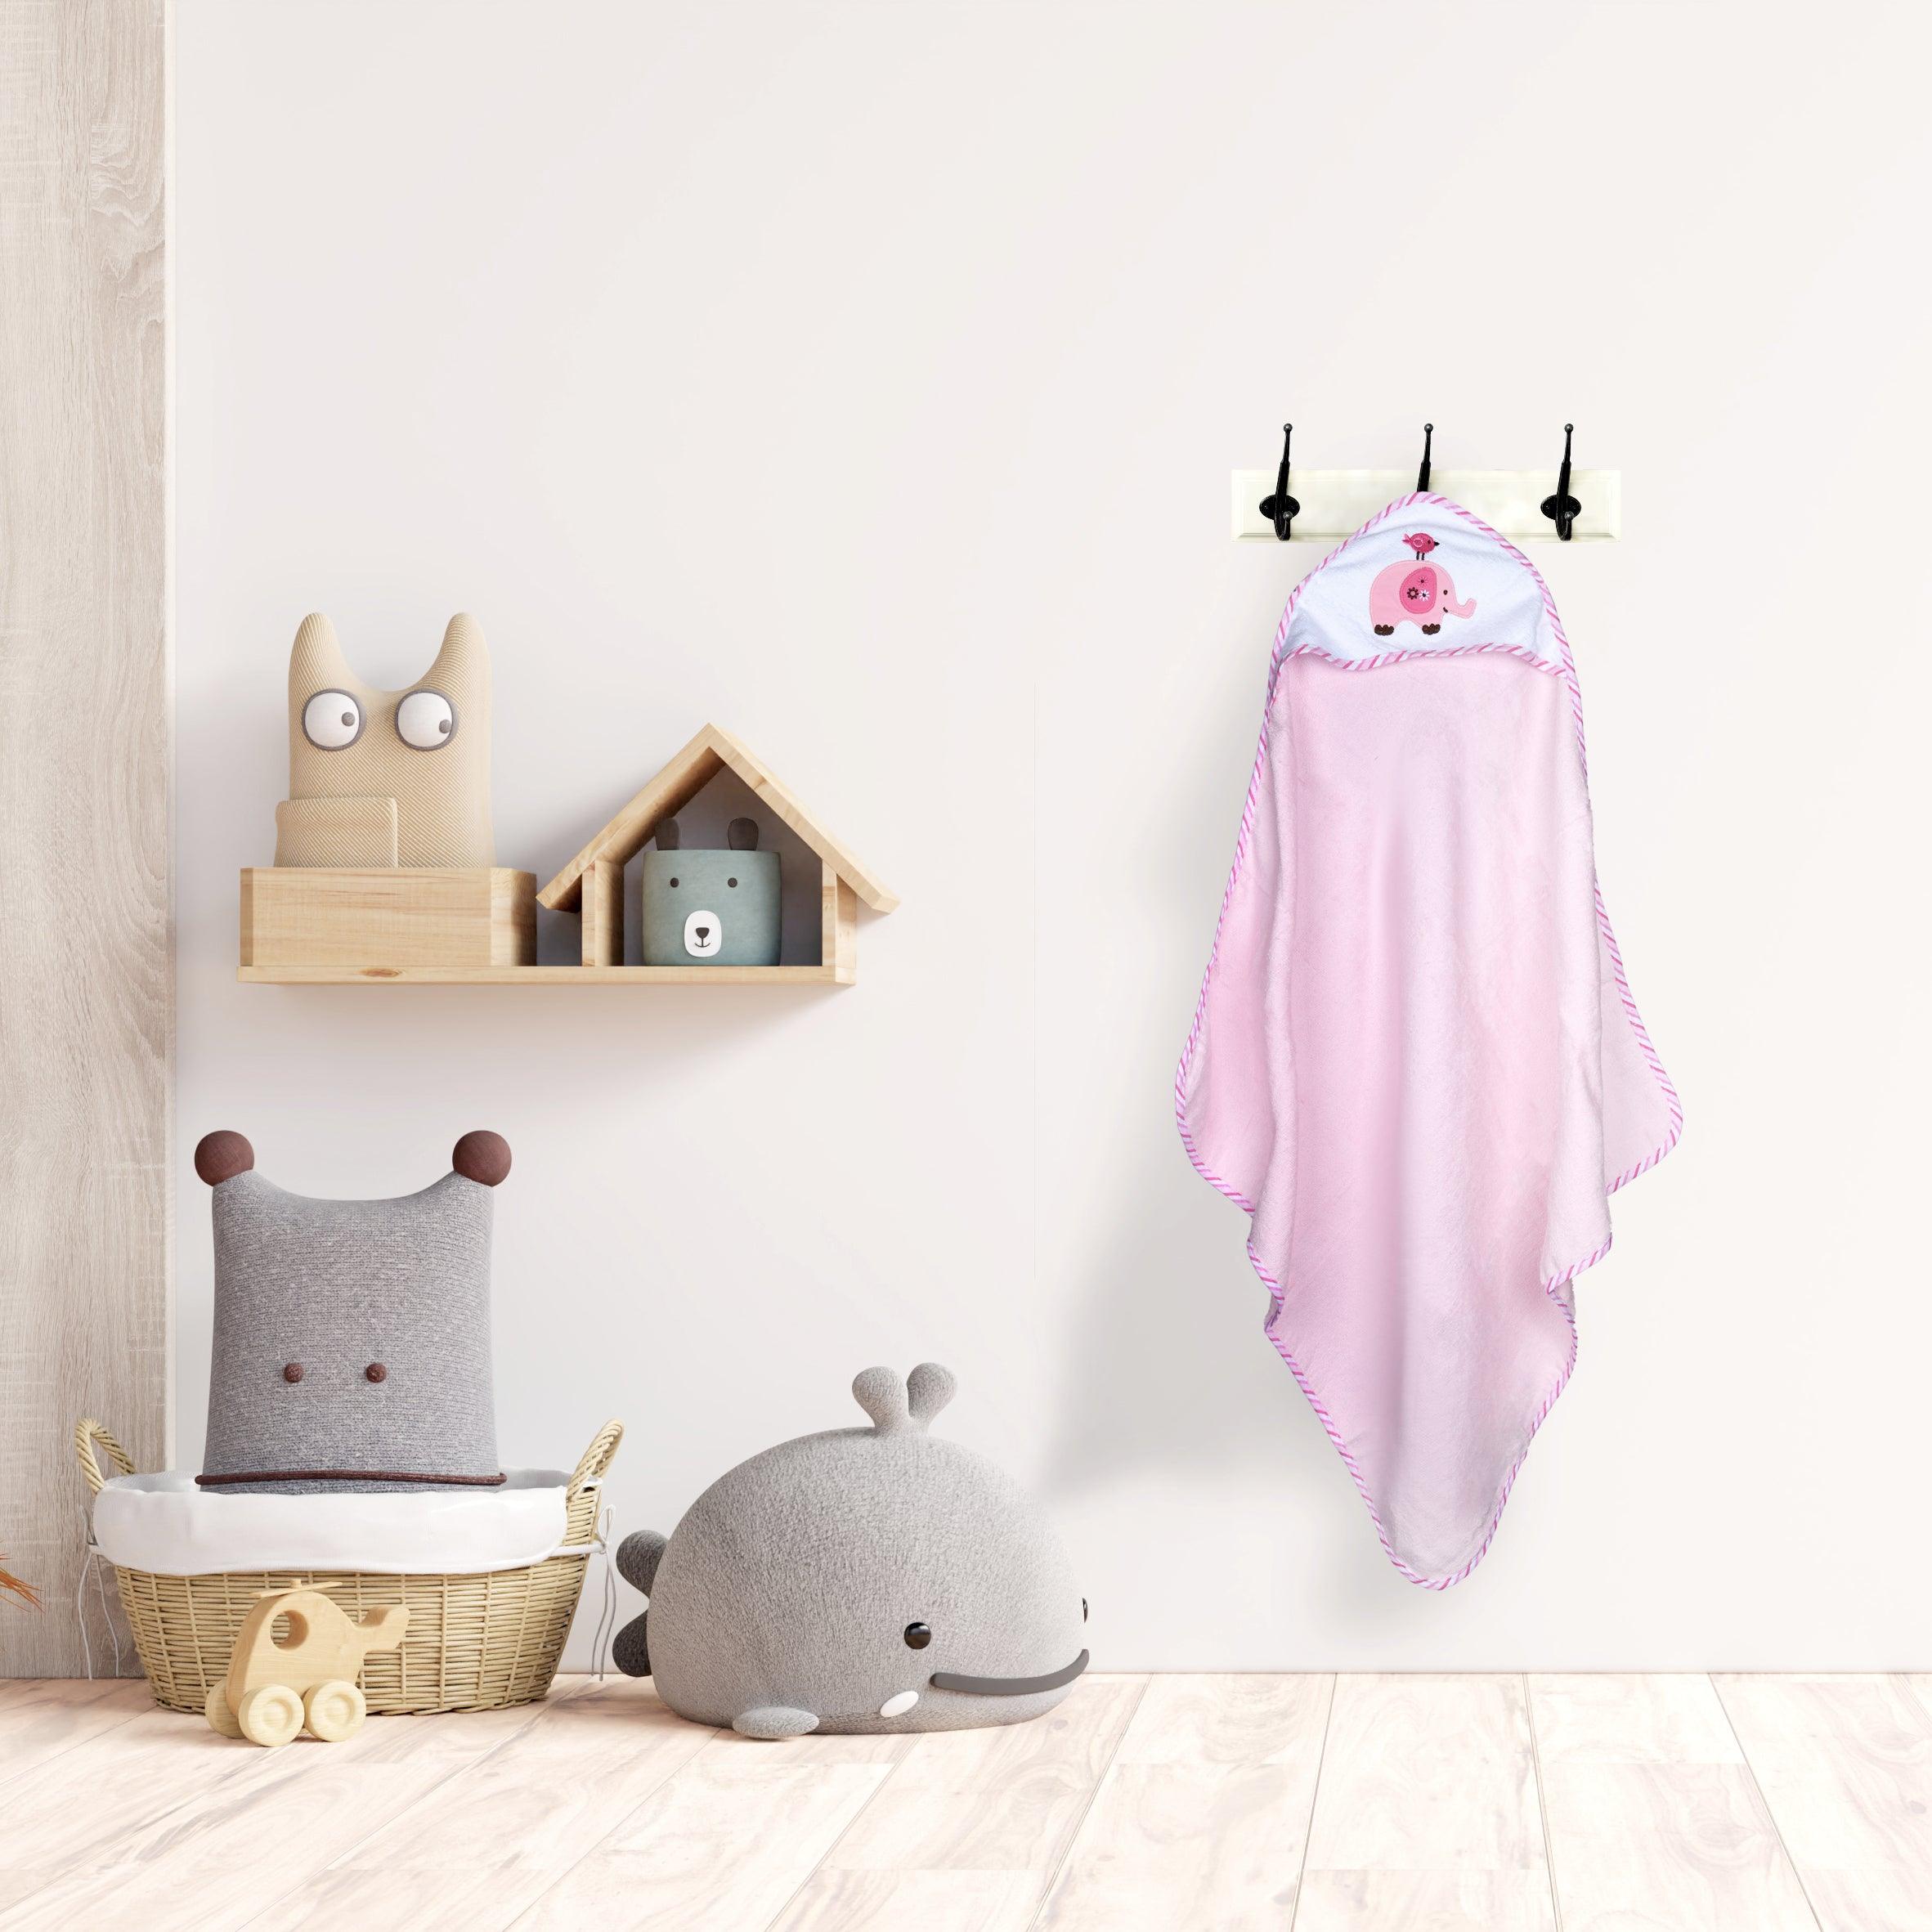 Elephant Pink Applique Hooded Towel & Wash Cloth Set - Baby Moo